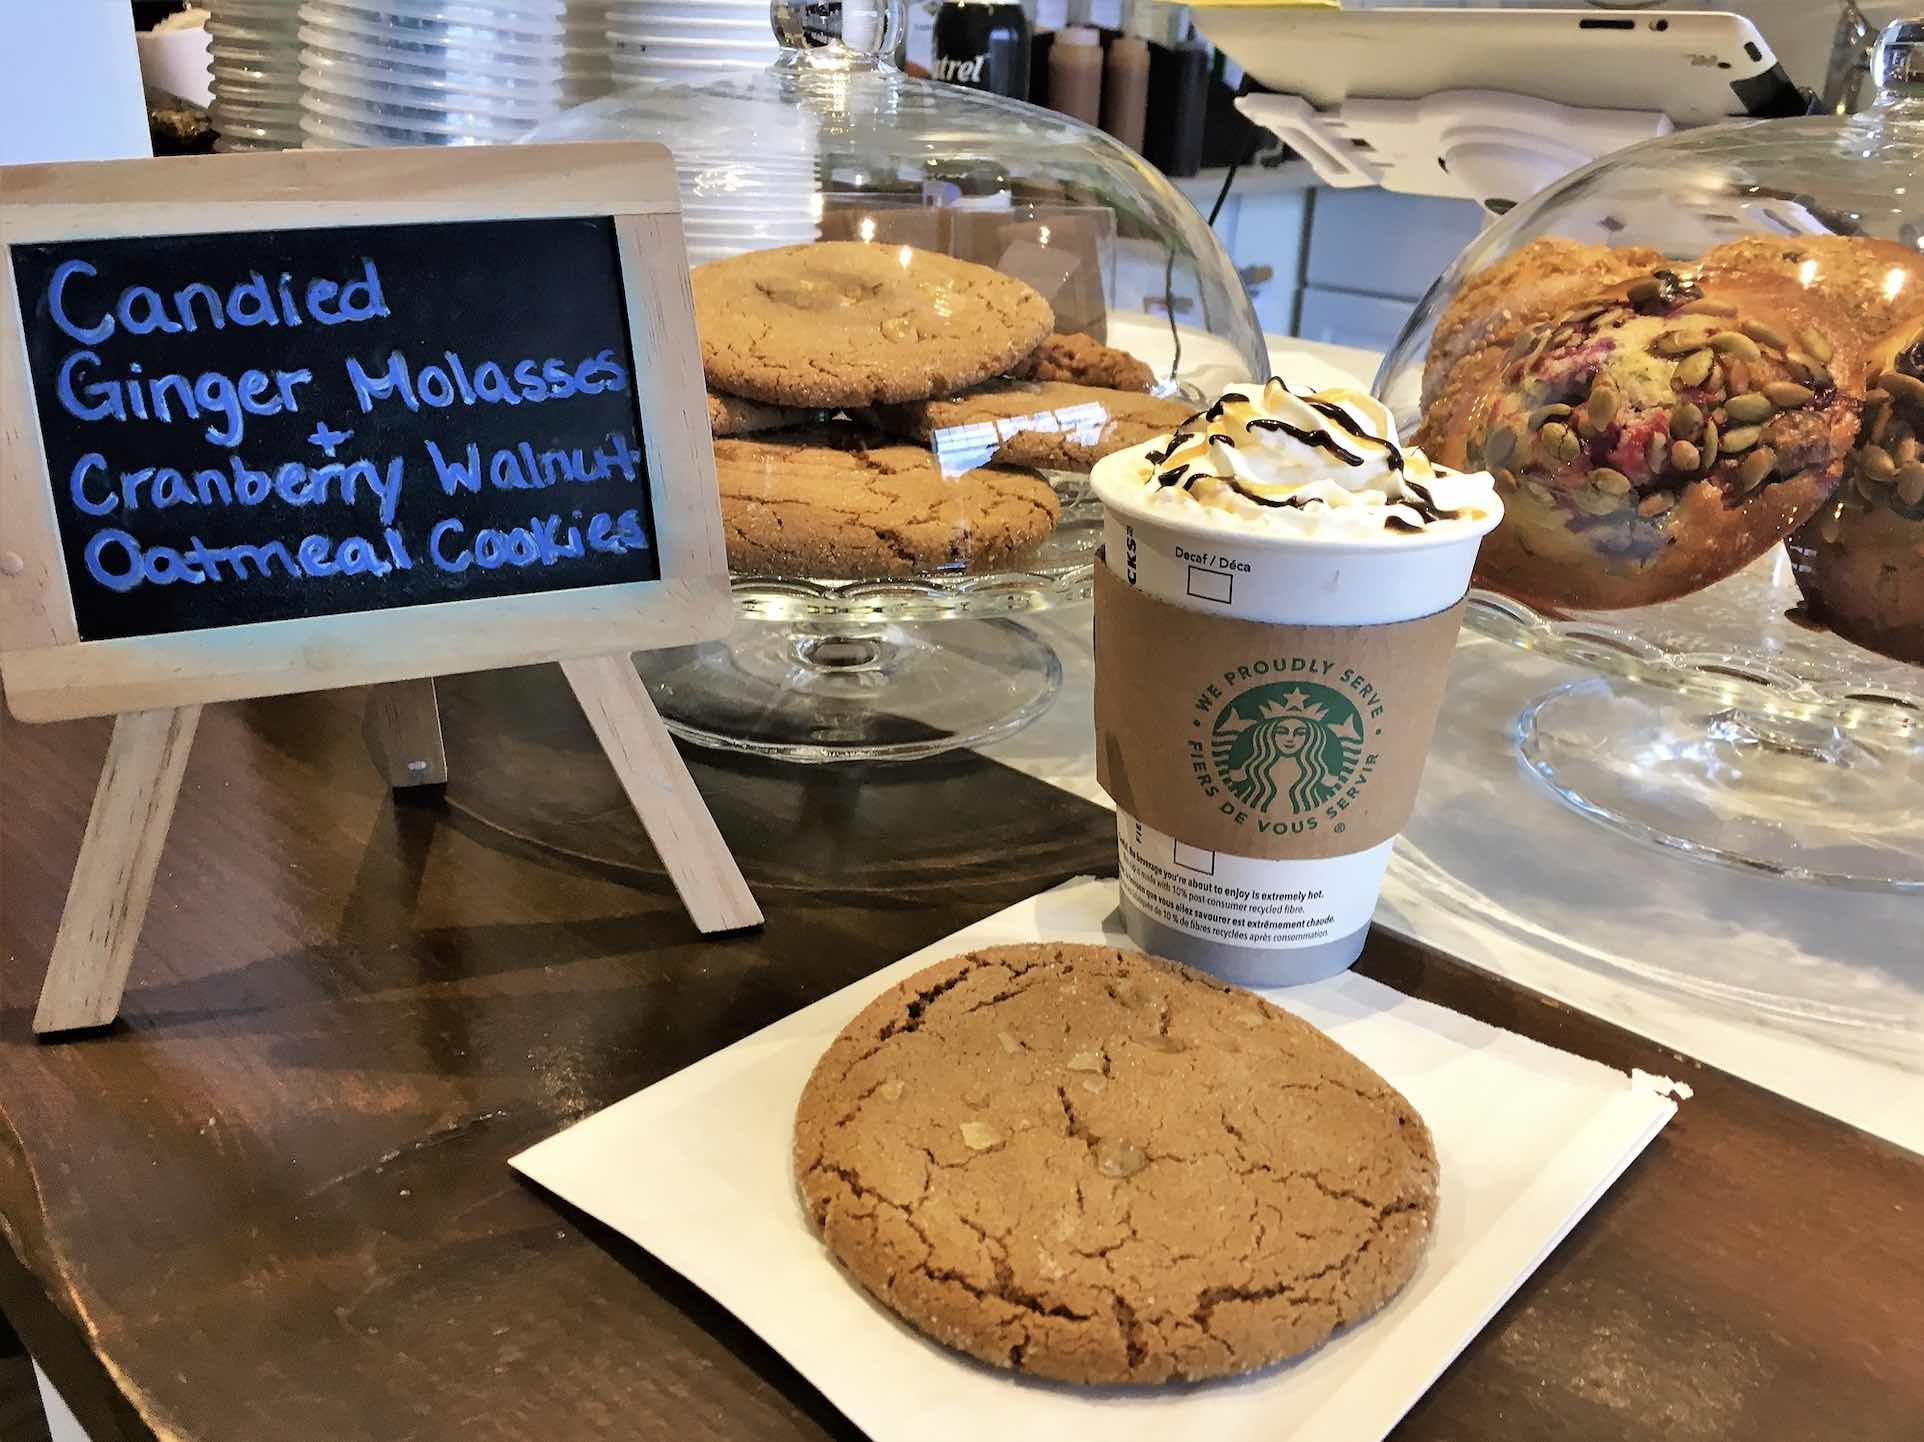 The Wheelhouse Café at The Shipyards Muskoka coffee house showing Starbucks and cookie